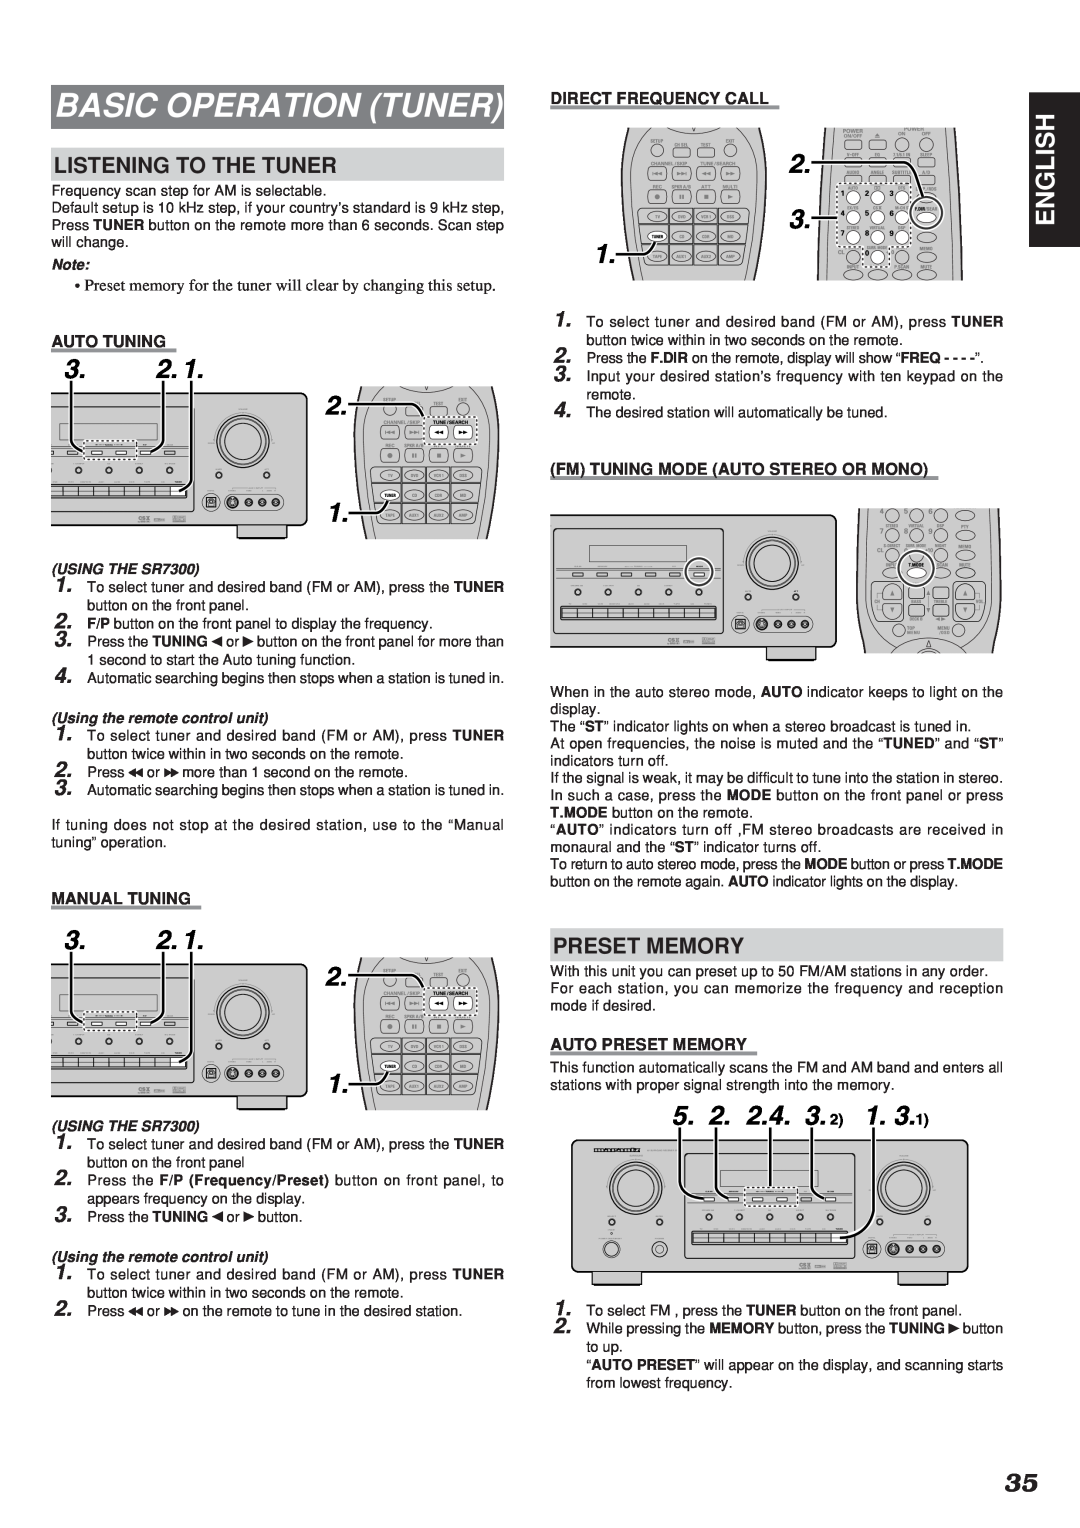 Marantz SR7300OSE manual Basic Operation Tuner, 3.2. 2, English, Auto Tuning, Manual Tuning, Direct Frequency Call 